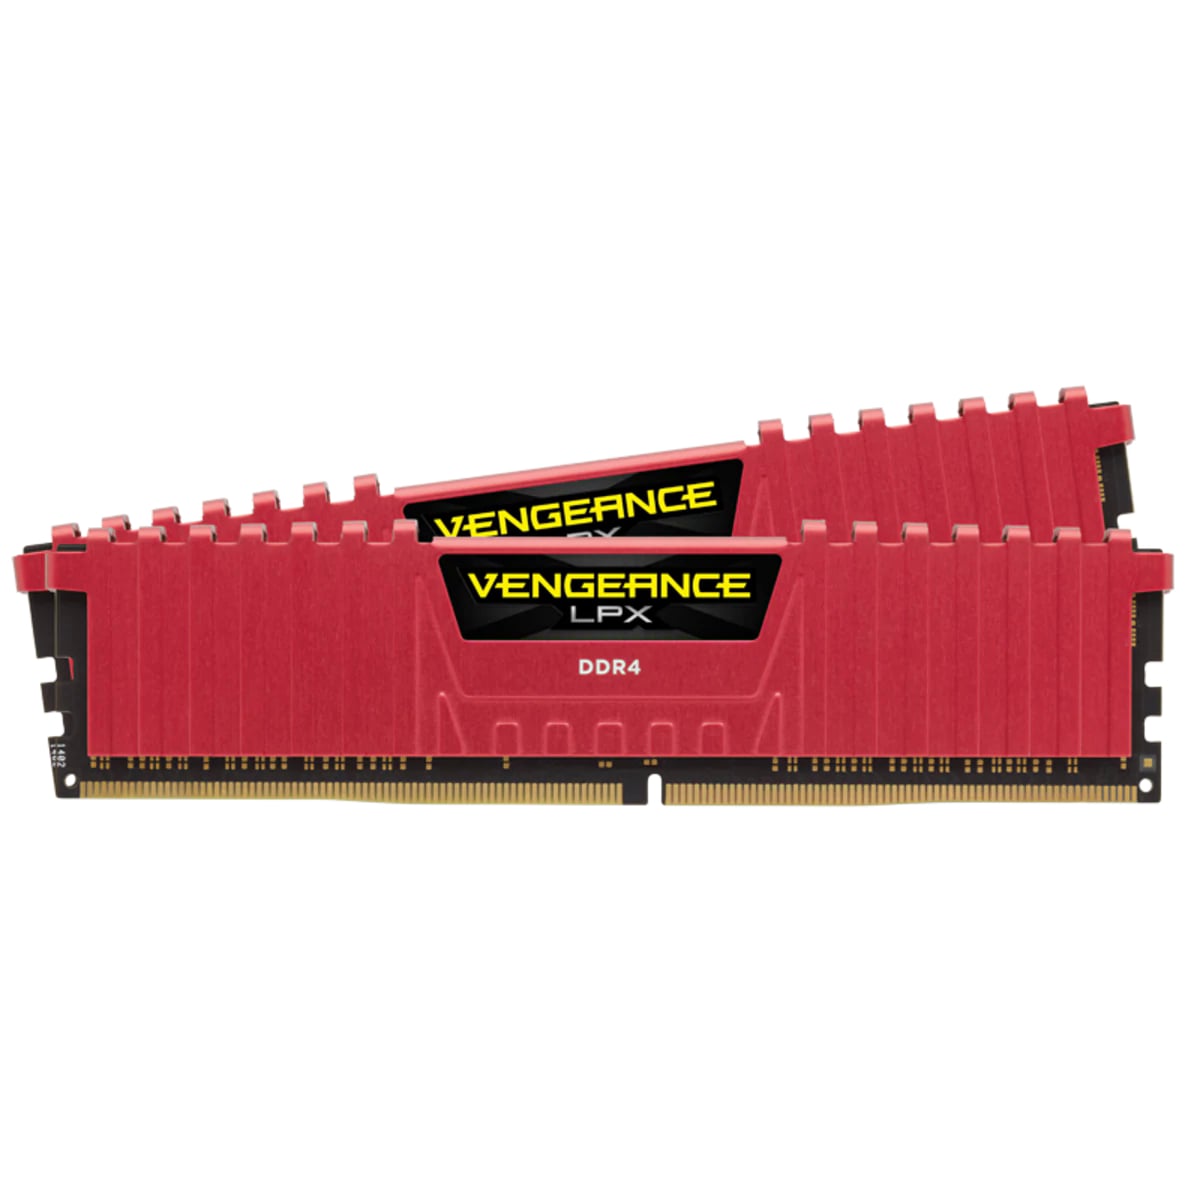 RAM CORSAIR VENGEANCE LPX 16GB (2x8GB) DDR4 2400MHz (RED) - CMK16GX4M2A2400C14R - songphuong.vn